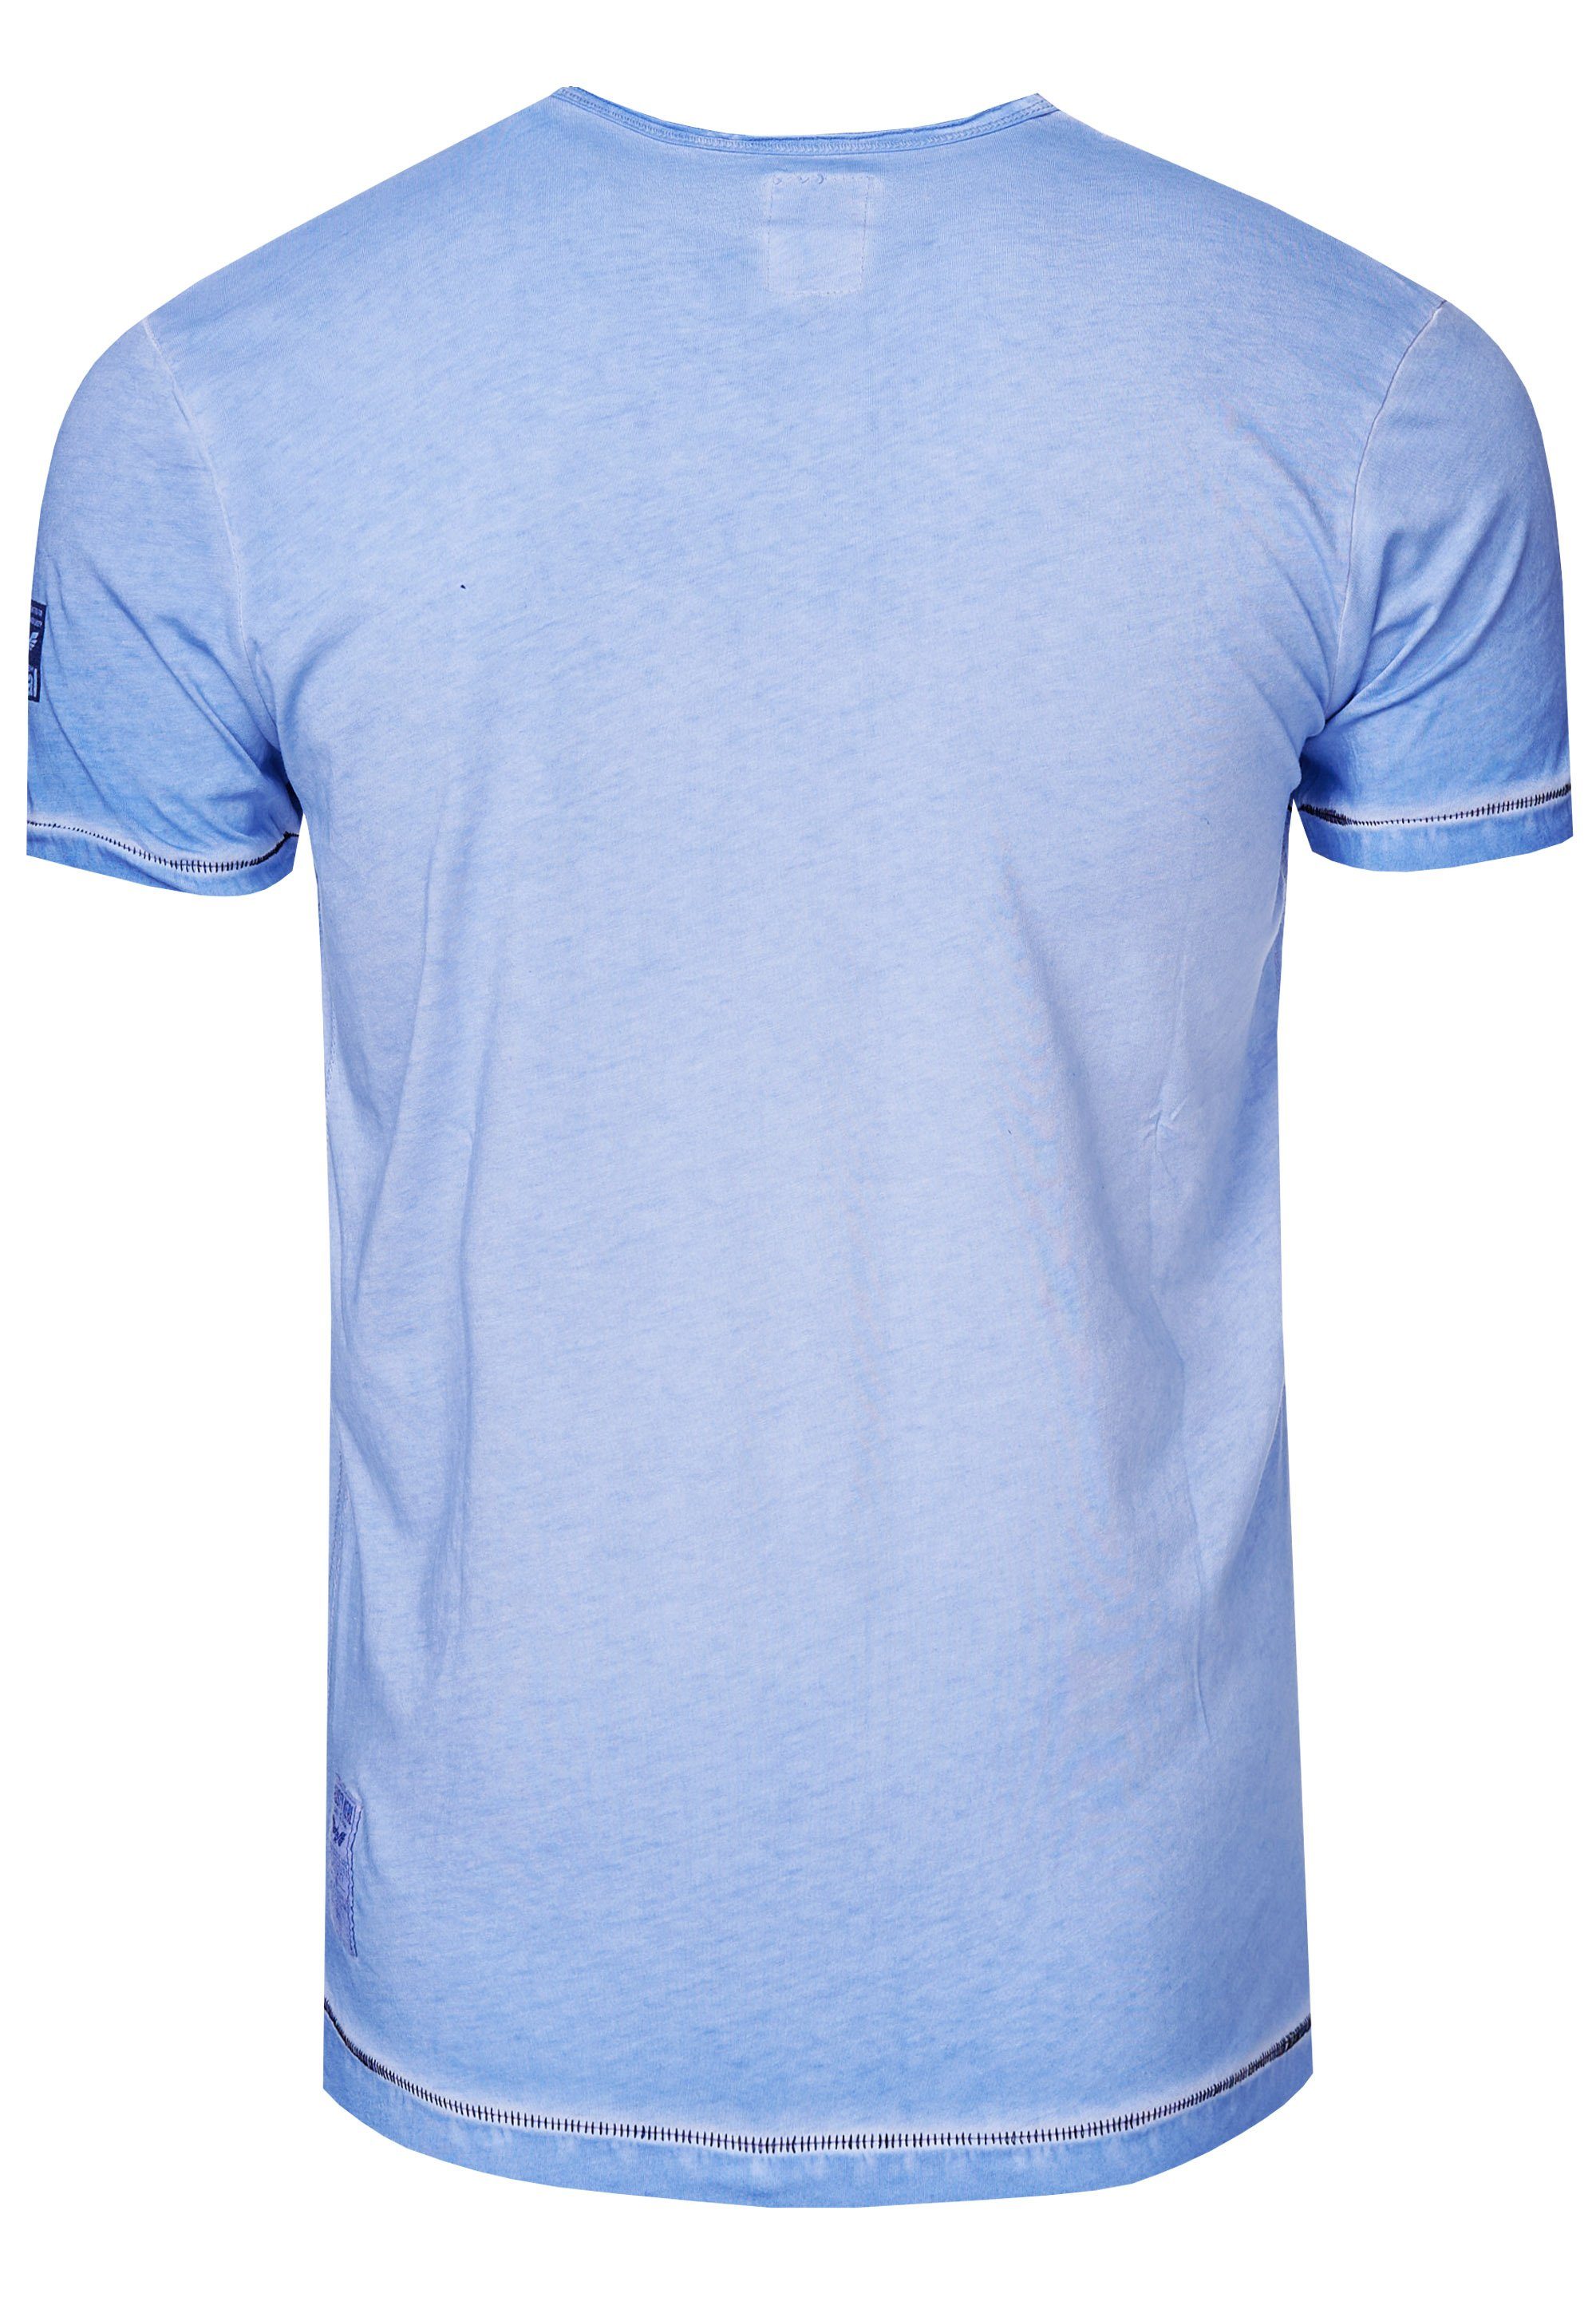 Rusty Neal T-Shirt im trendigen blau Vintage-Look